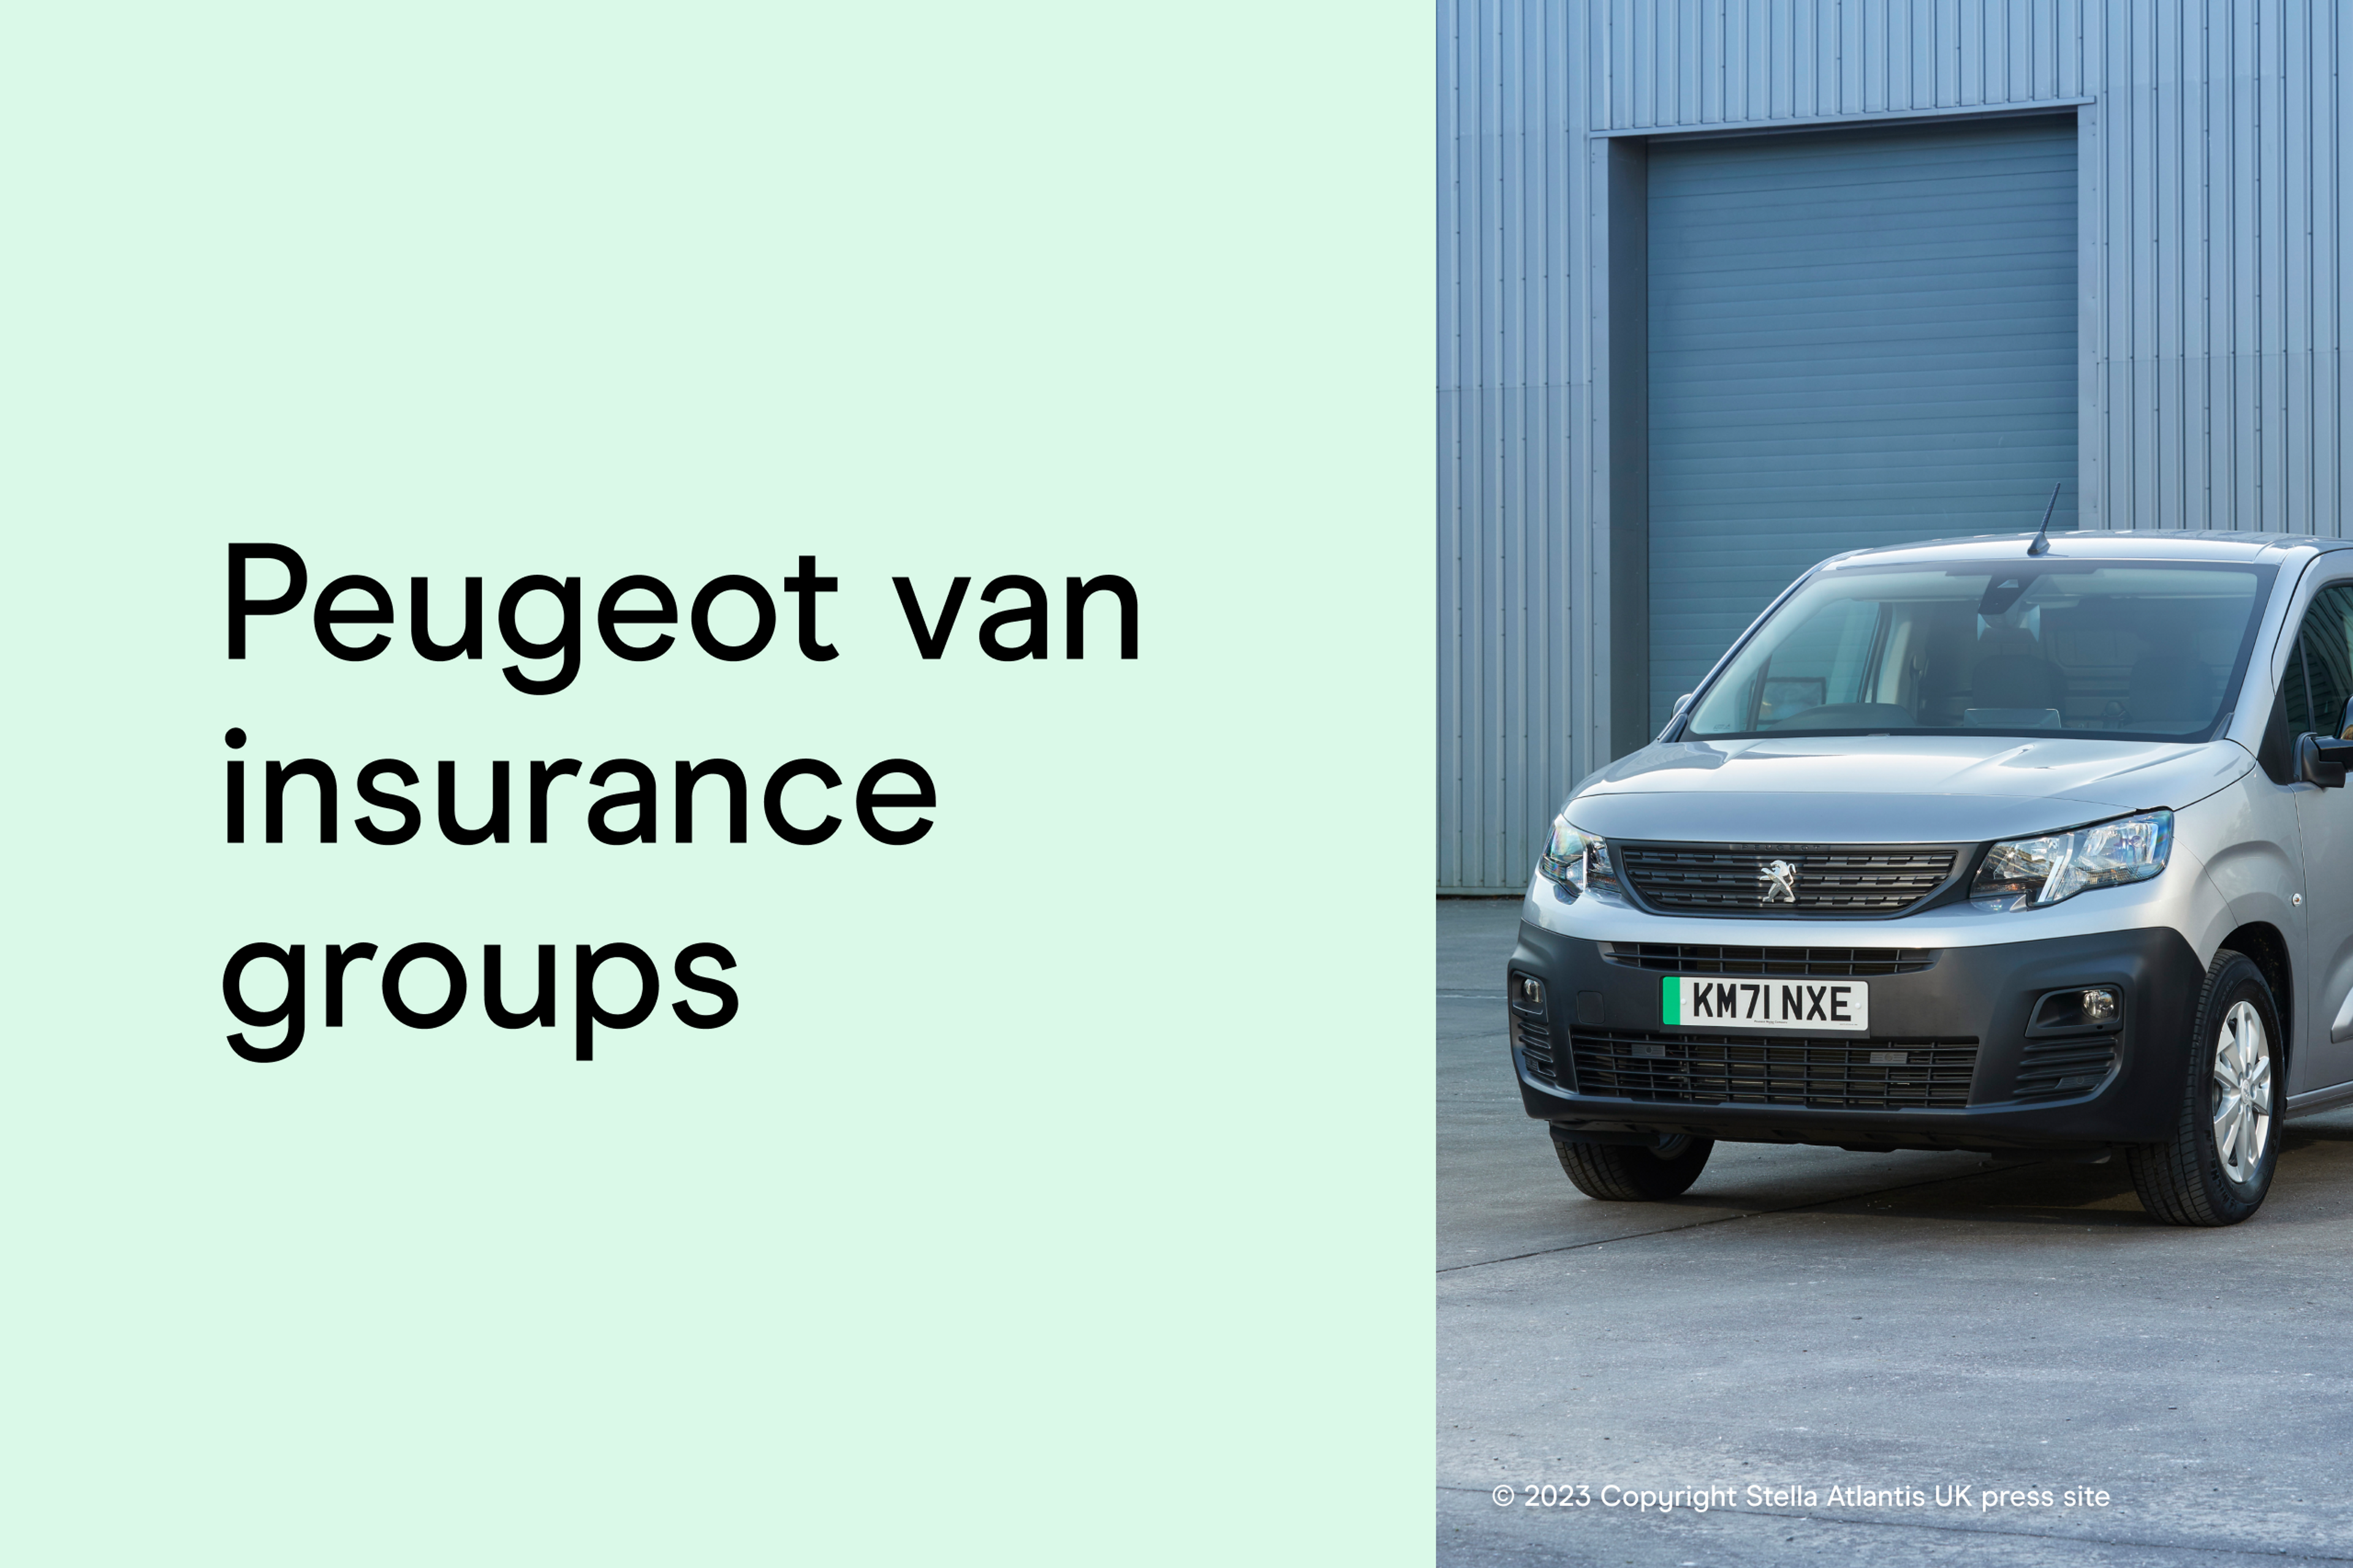 Peugeot van insurance groups